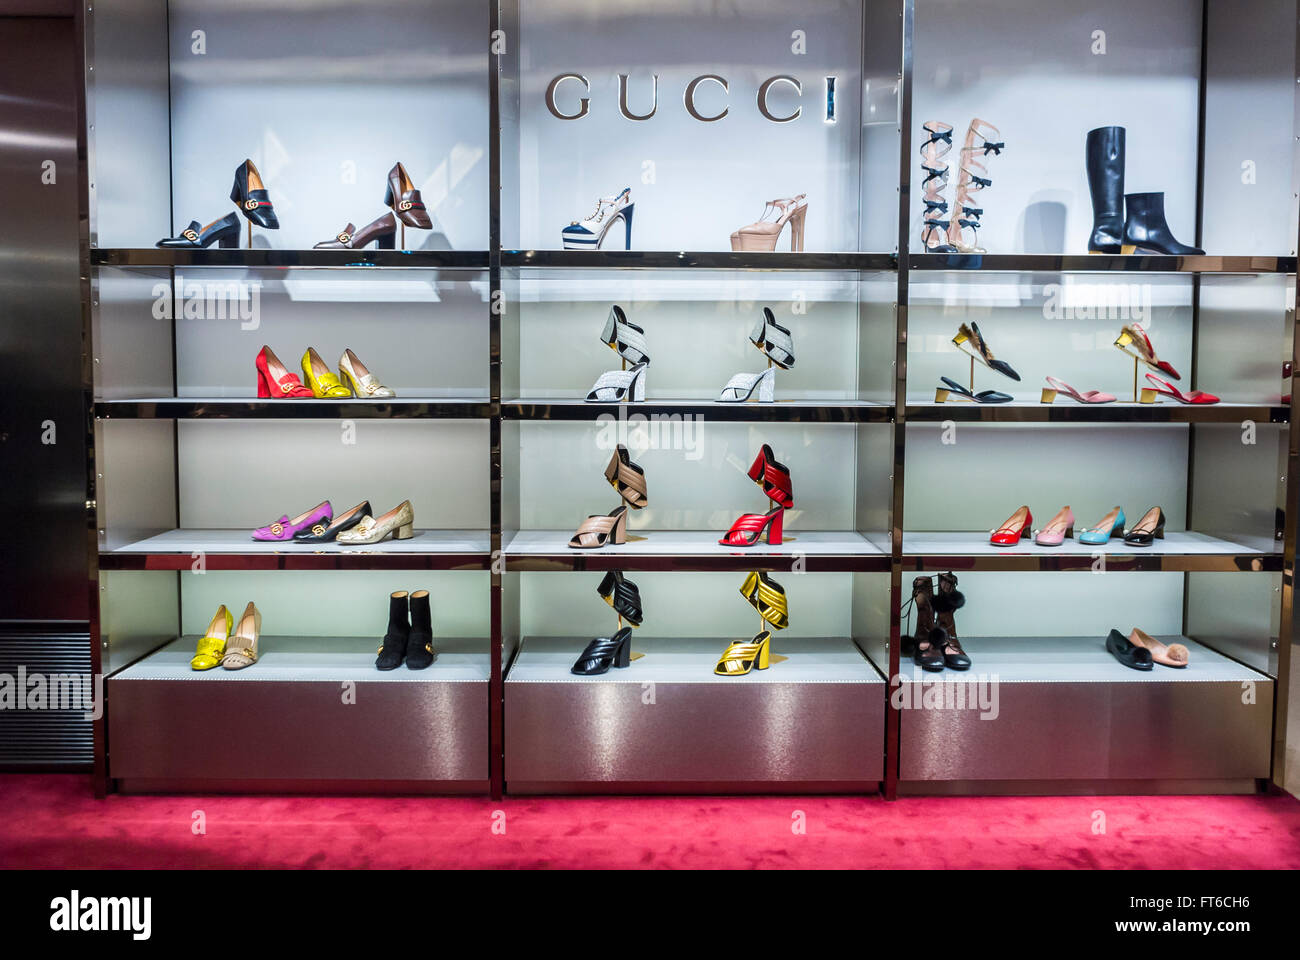 Ladies Fashion Shop In Paris France Europe Stock Photo - Alamy